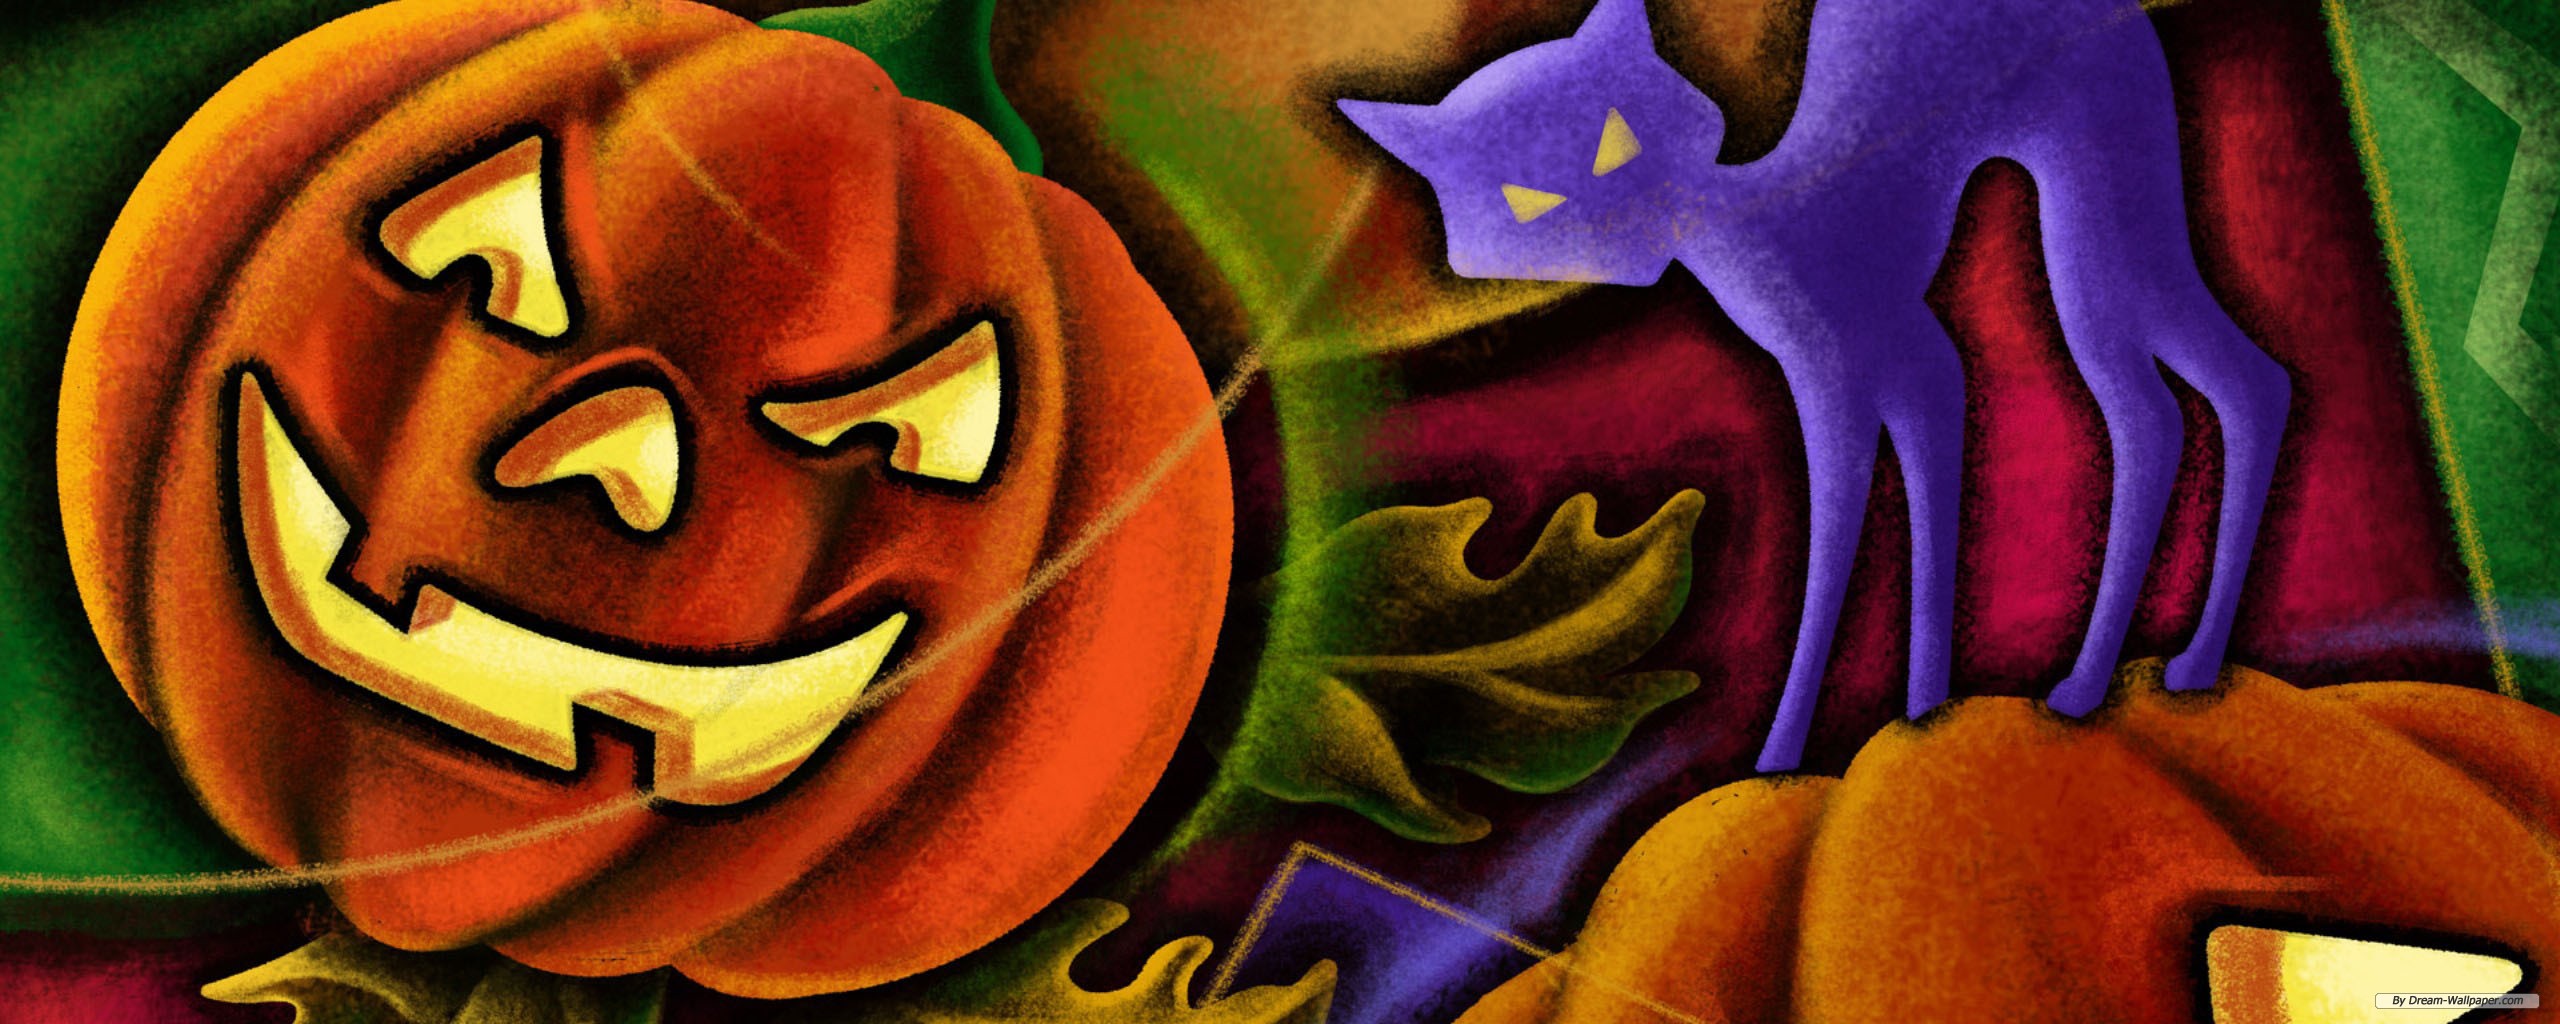 Wallpaper Halloween Episode Dual Screen